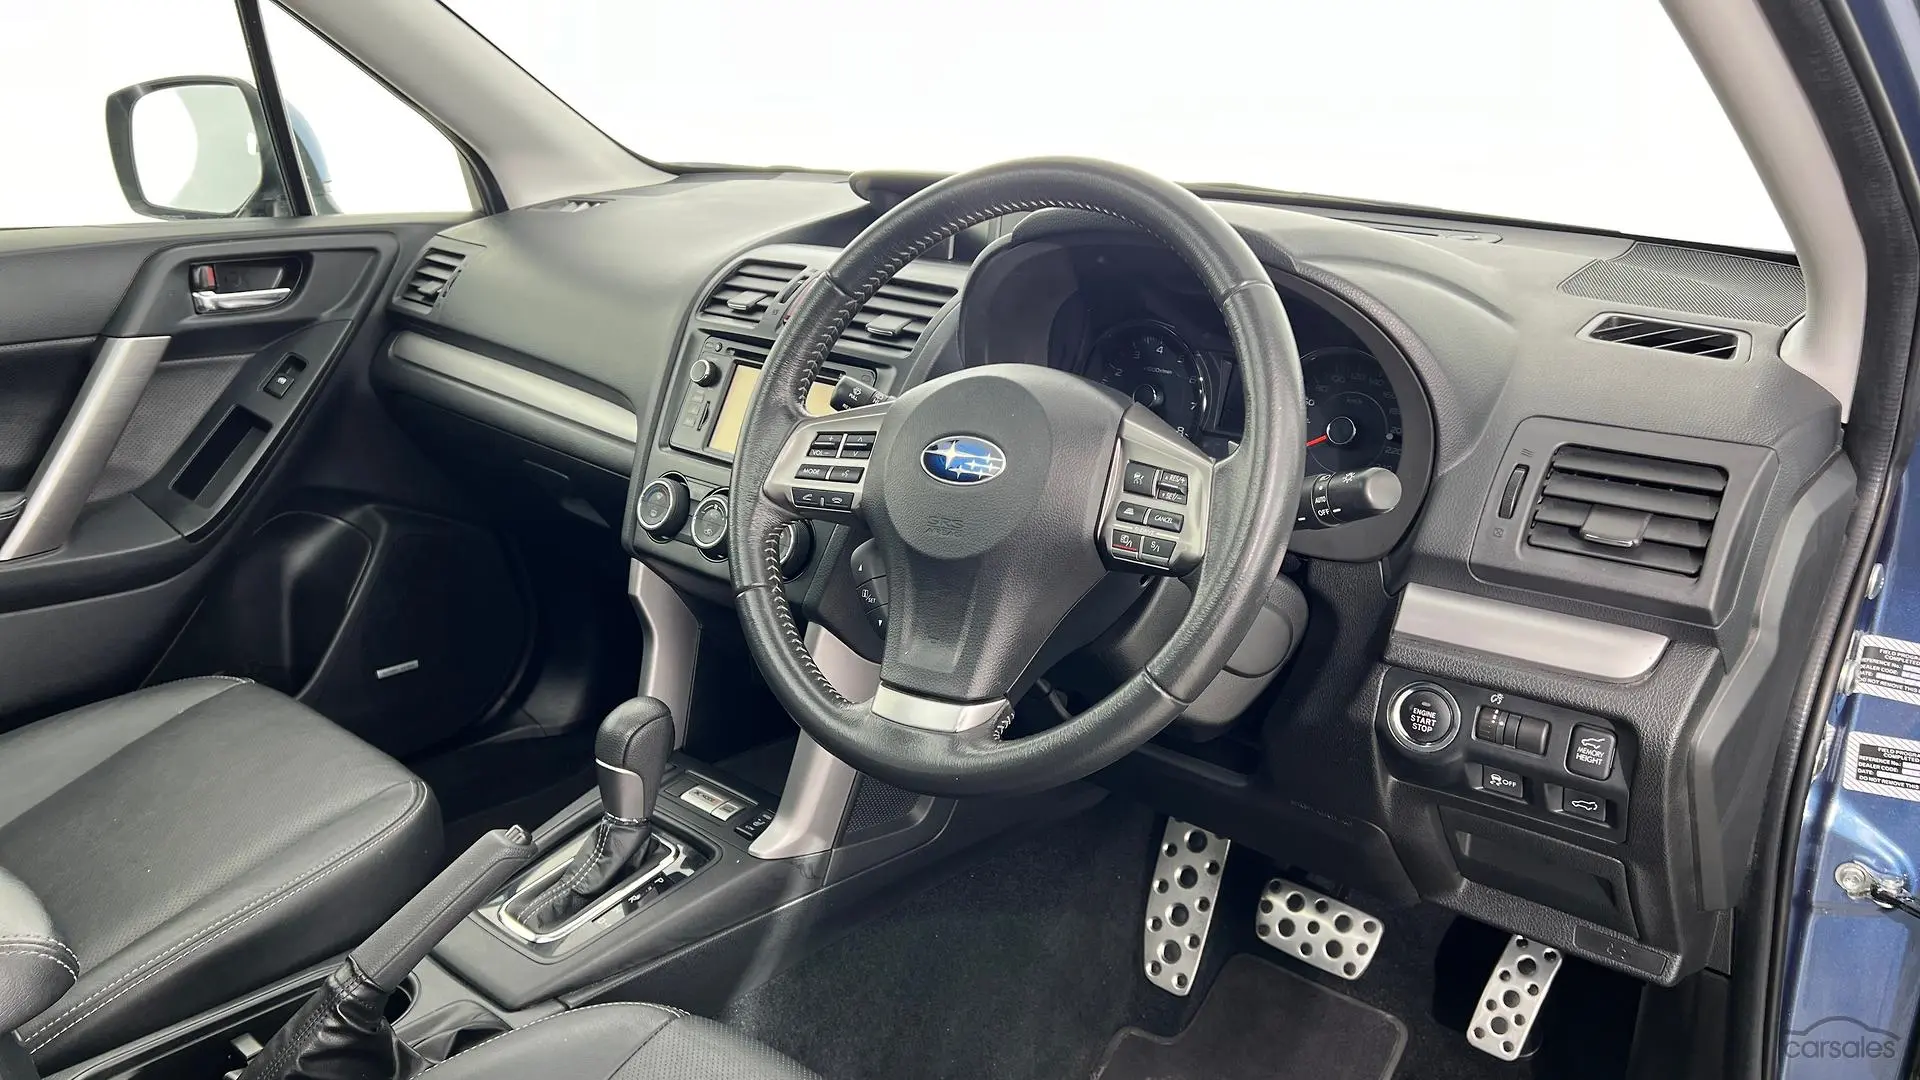 2014 Subaru Forester Image 20